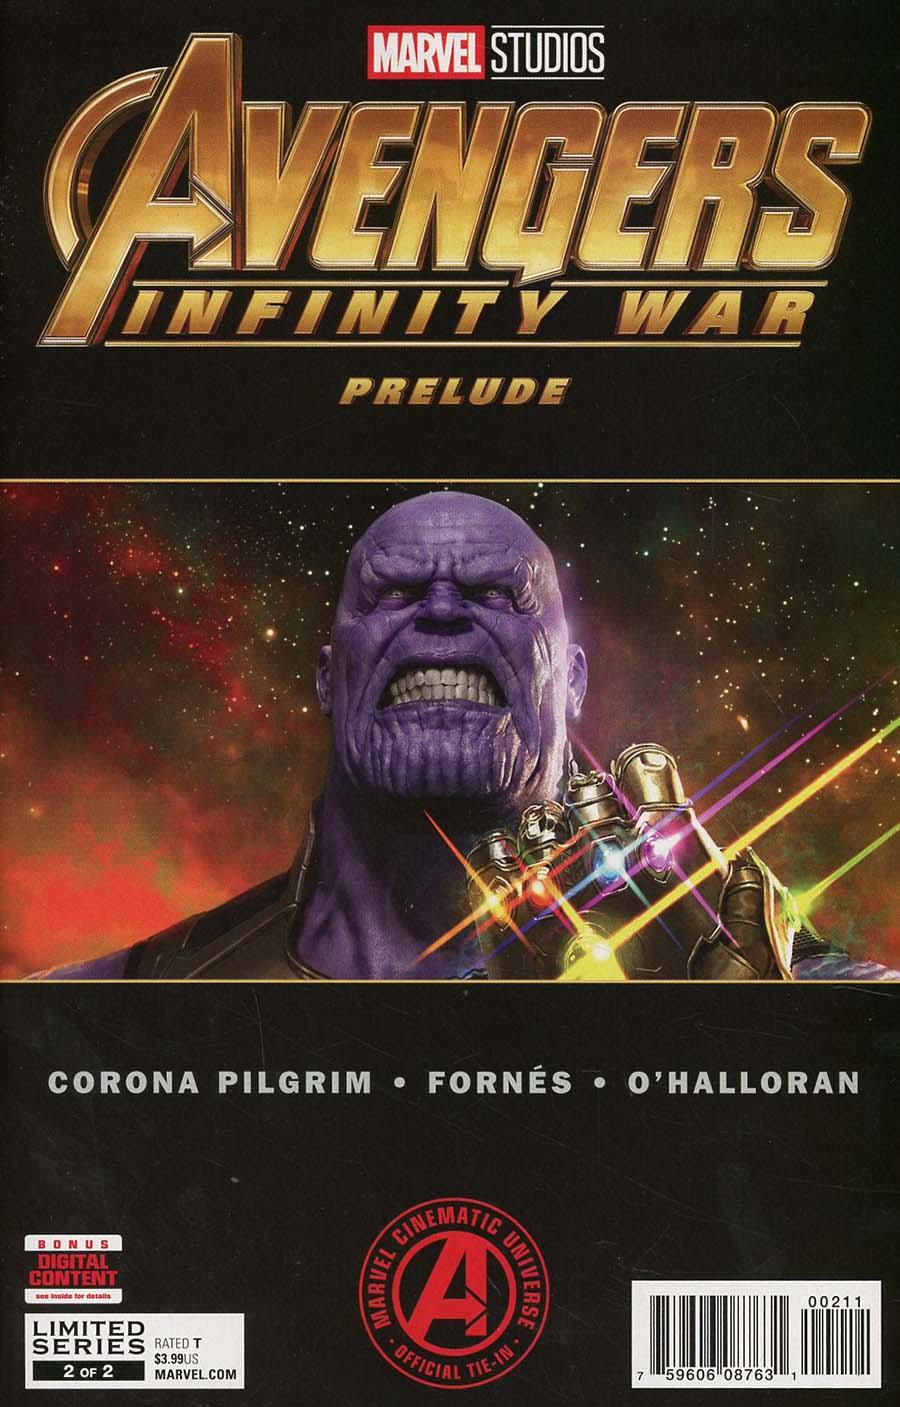 Marvels Avengers Infinity War Prelude Vol. 1 #2